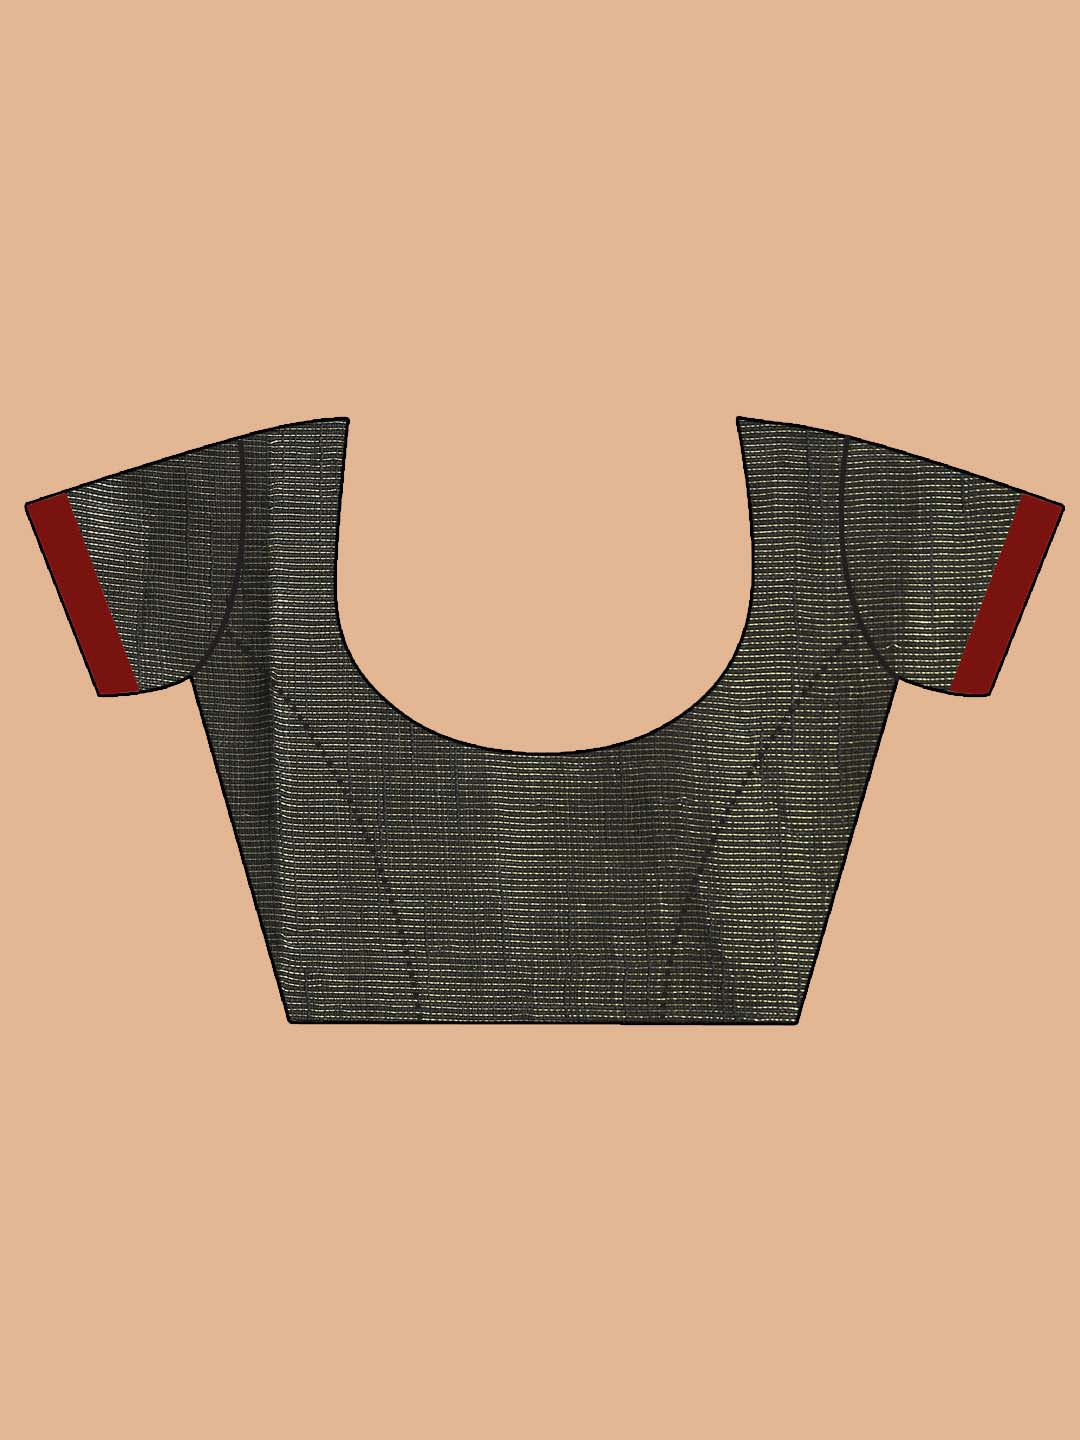 Indethnic Black Bengal Handloom Cotton Blend Party Saree - Blouse Piece View